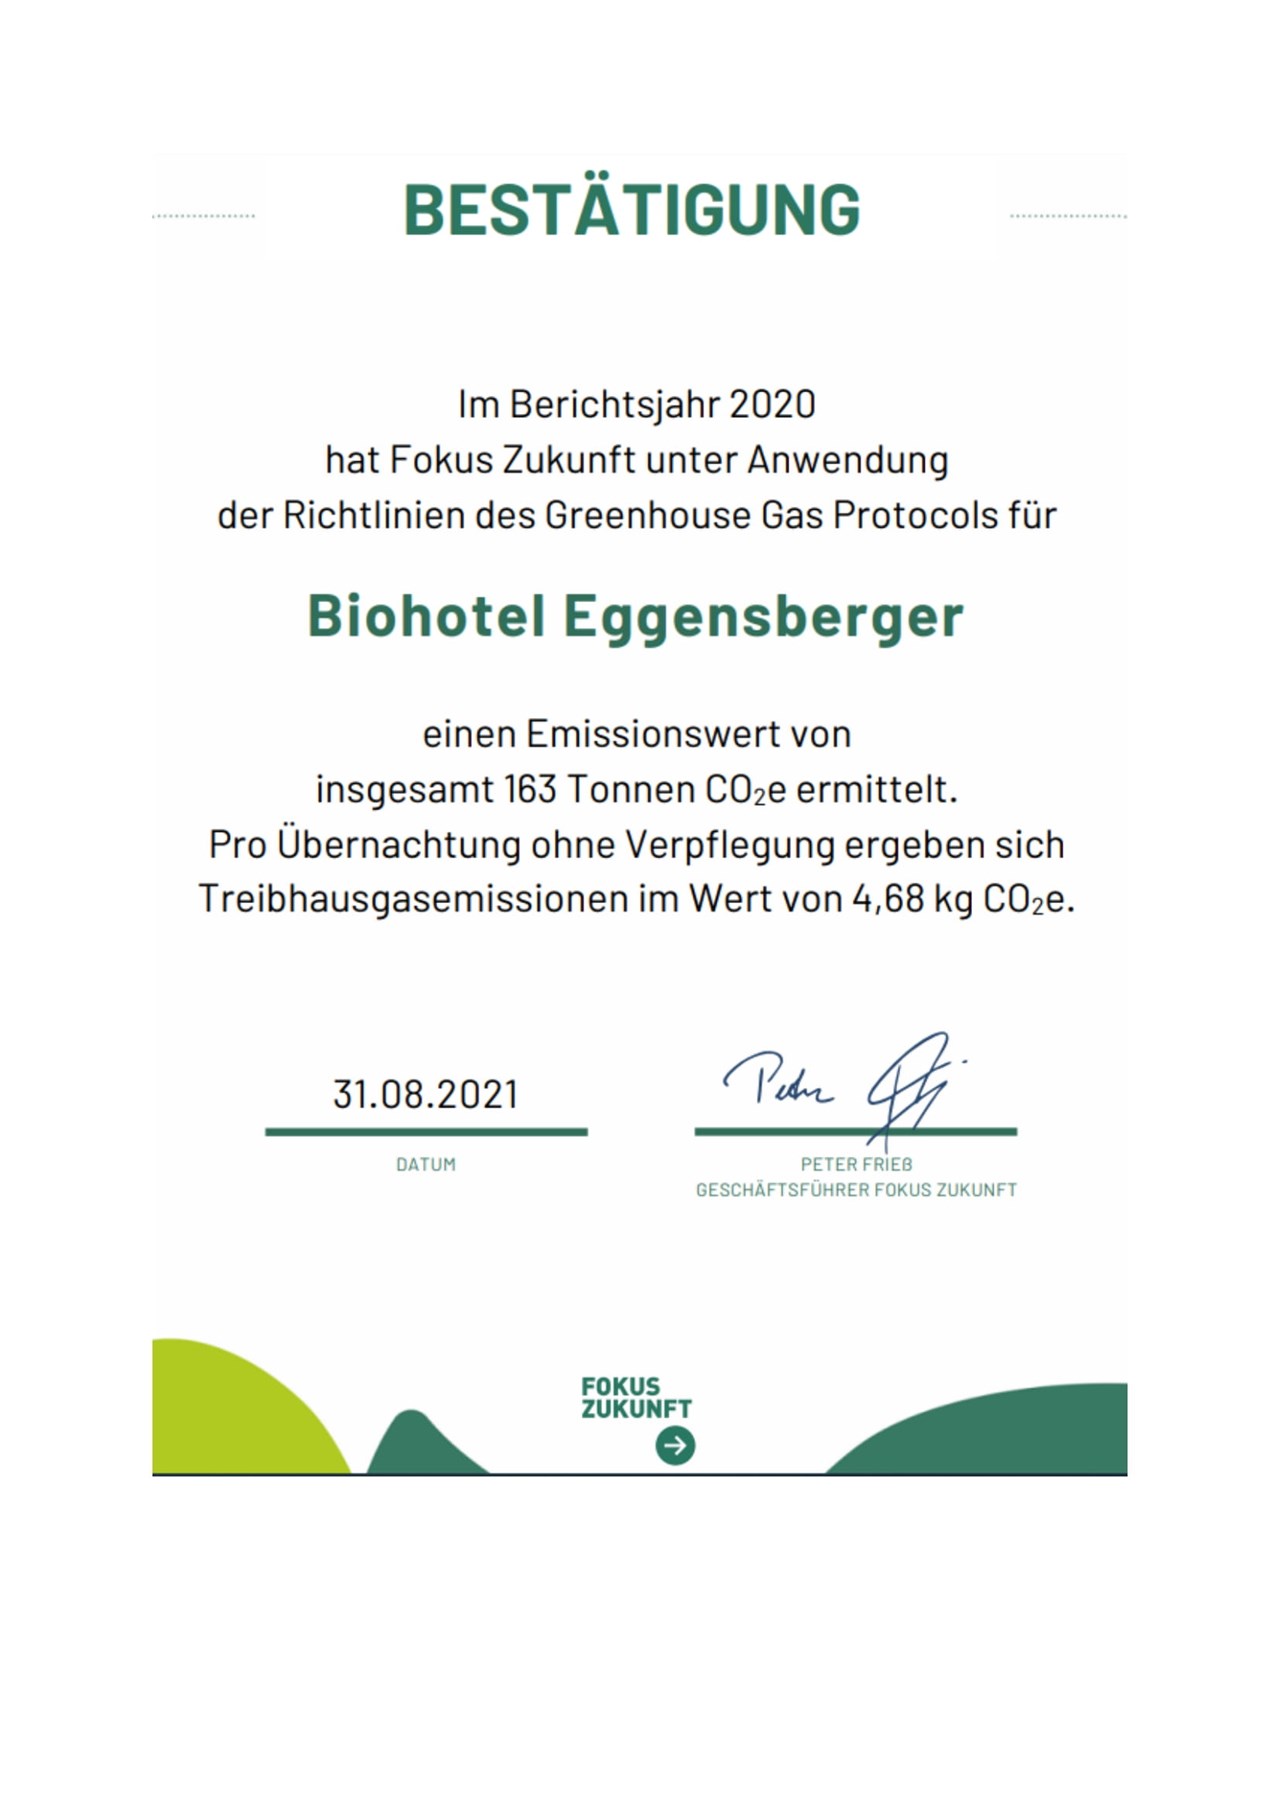 Biohotel Eggensberger Nachweise Zertifikate FOKUS Zukunft: Klimapositiv